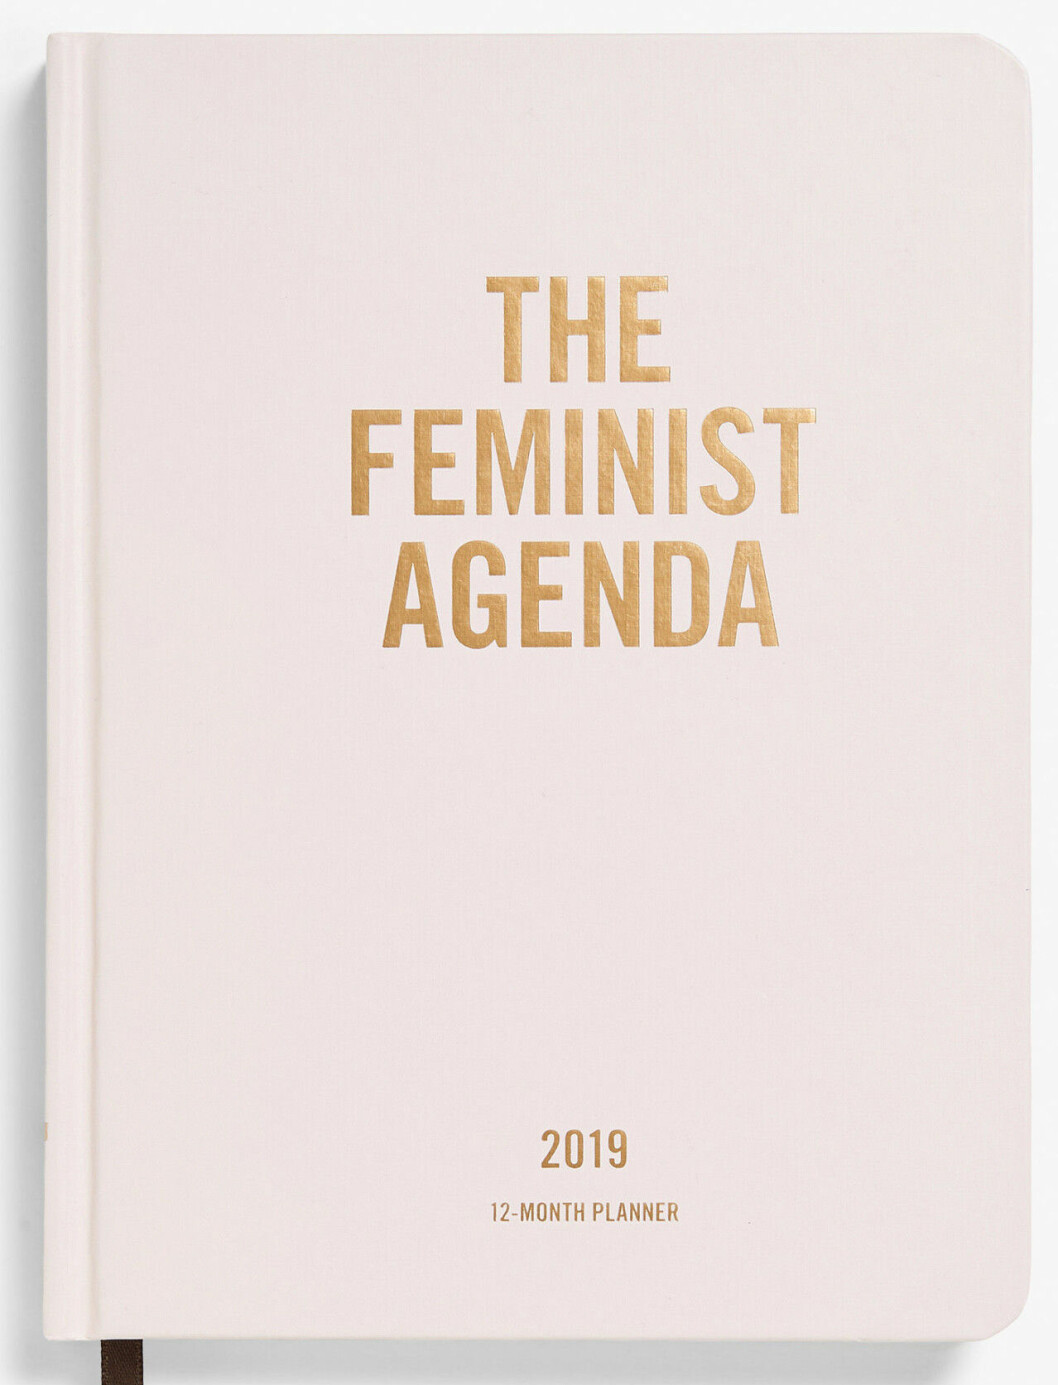 Kalendern med texten  ”The Feminist Agenda” på framsidan